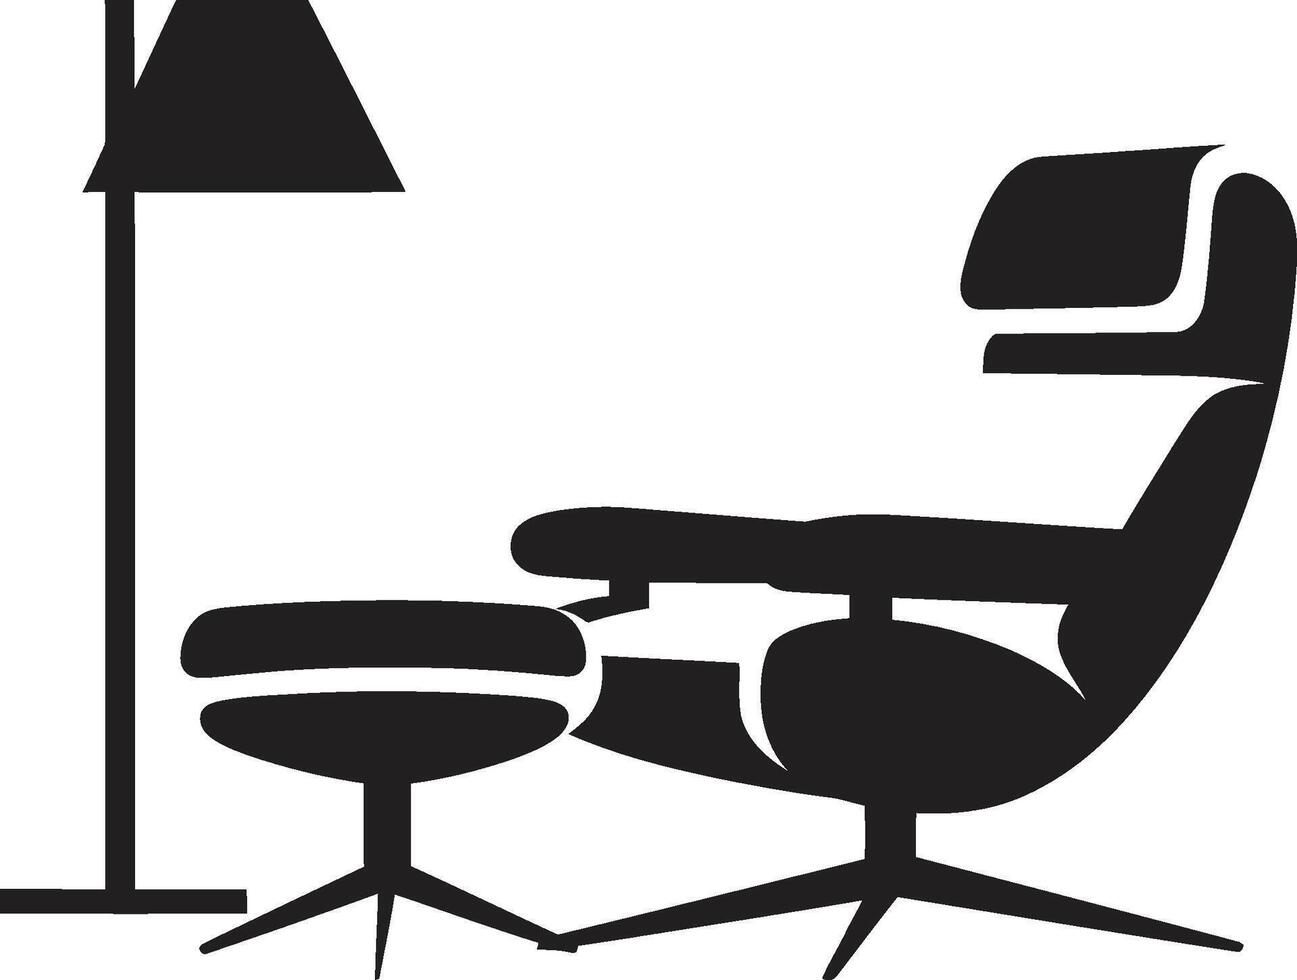 tranquilo tendencias insignias vector logo para último comodidad con moderno silla urbano elegancia cresta elegante silla icono en vector logo para de moda espacios